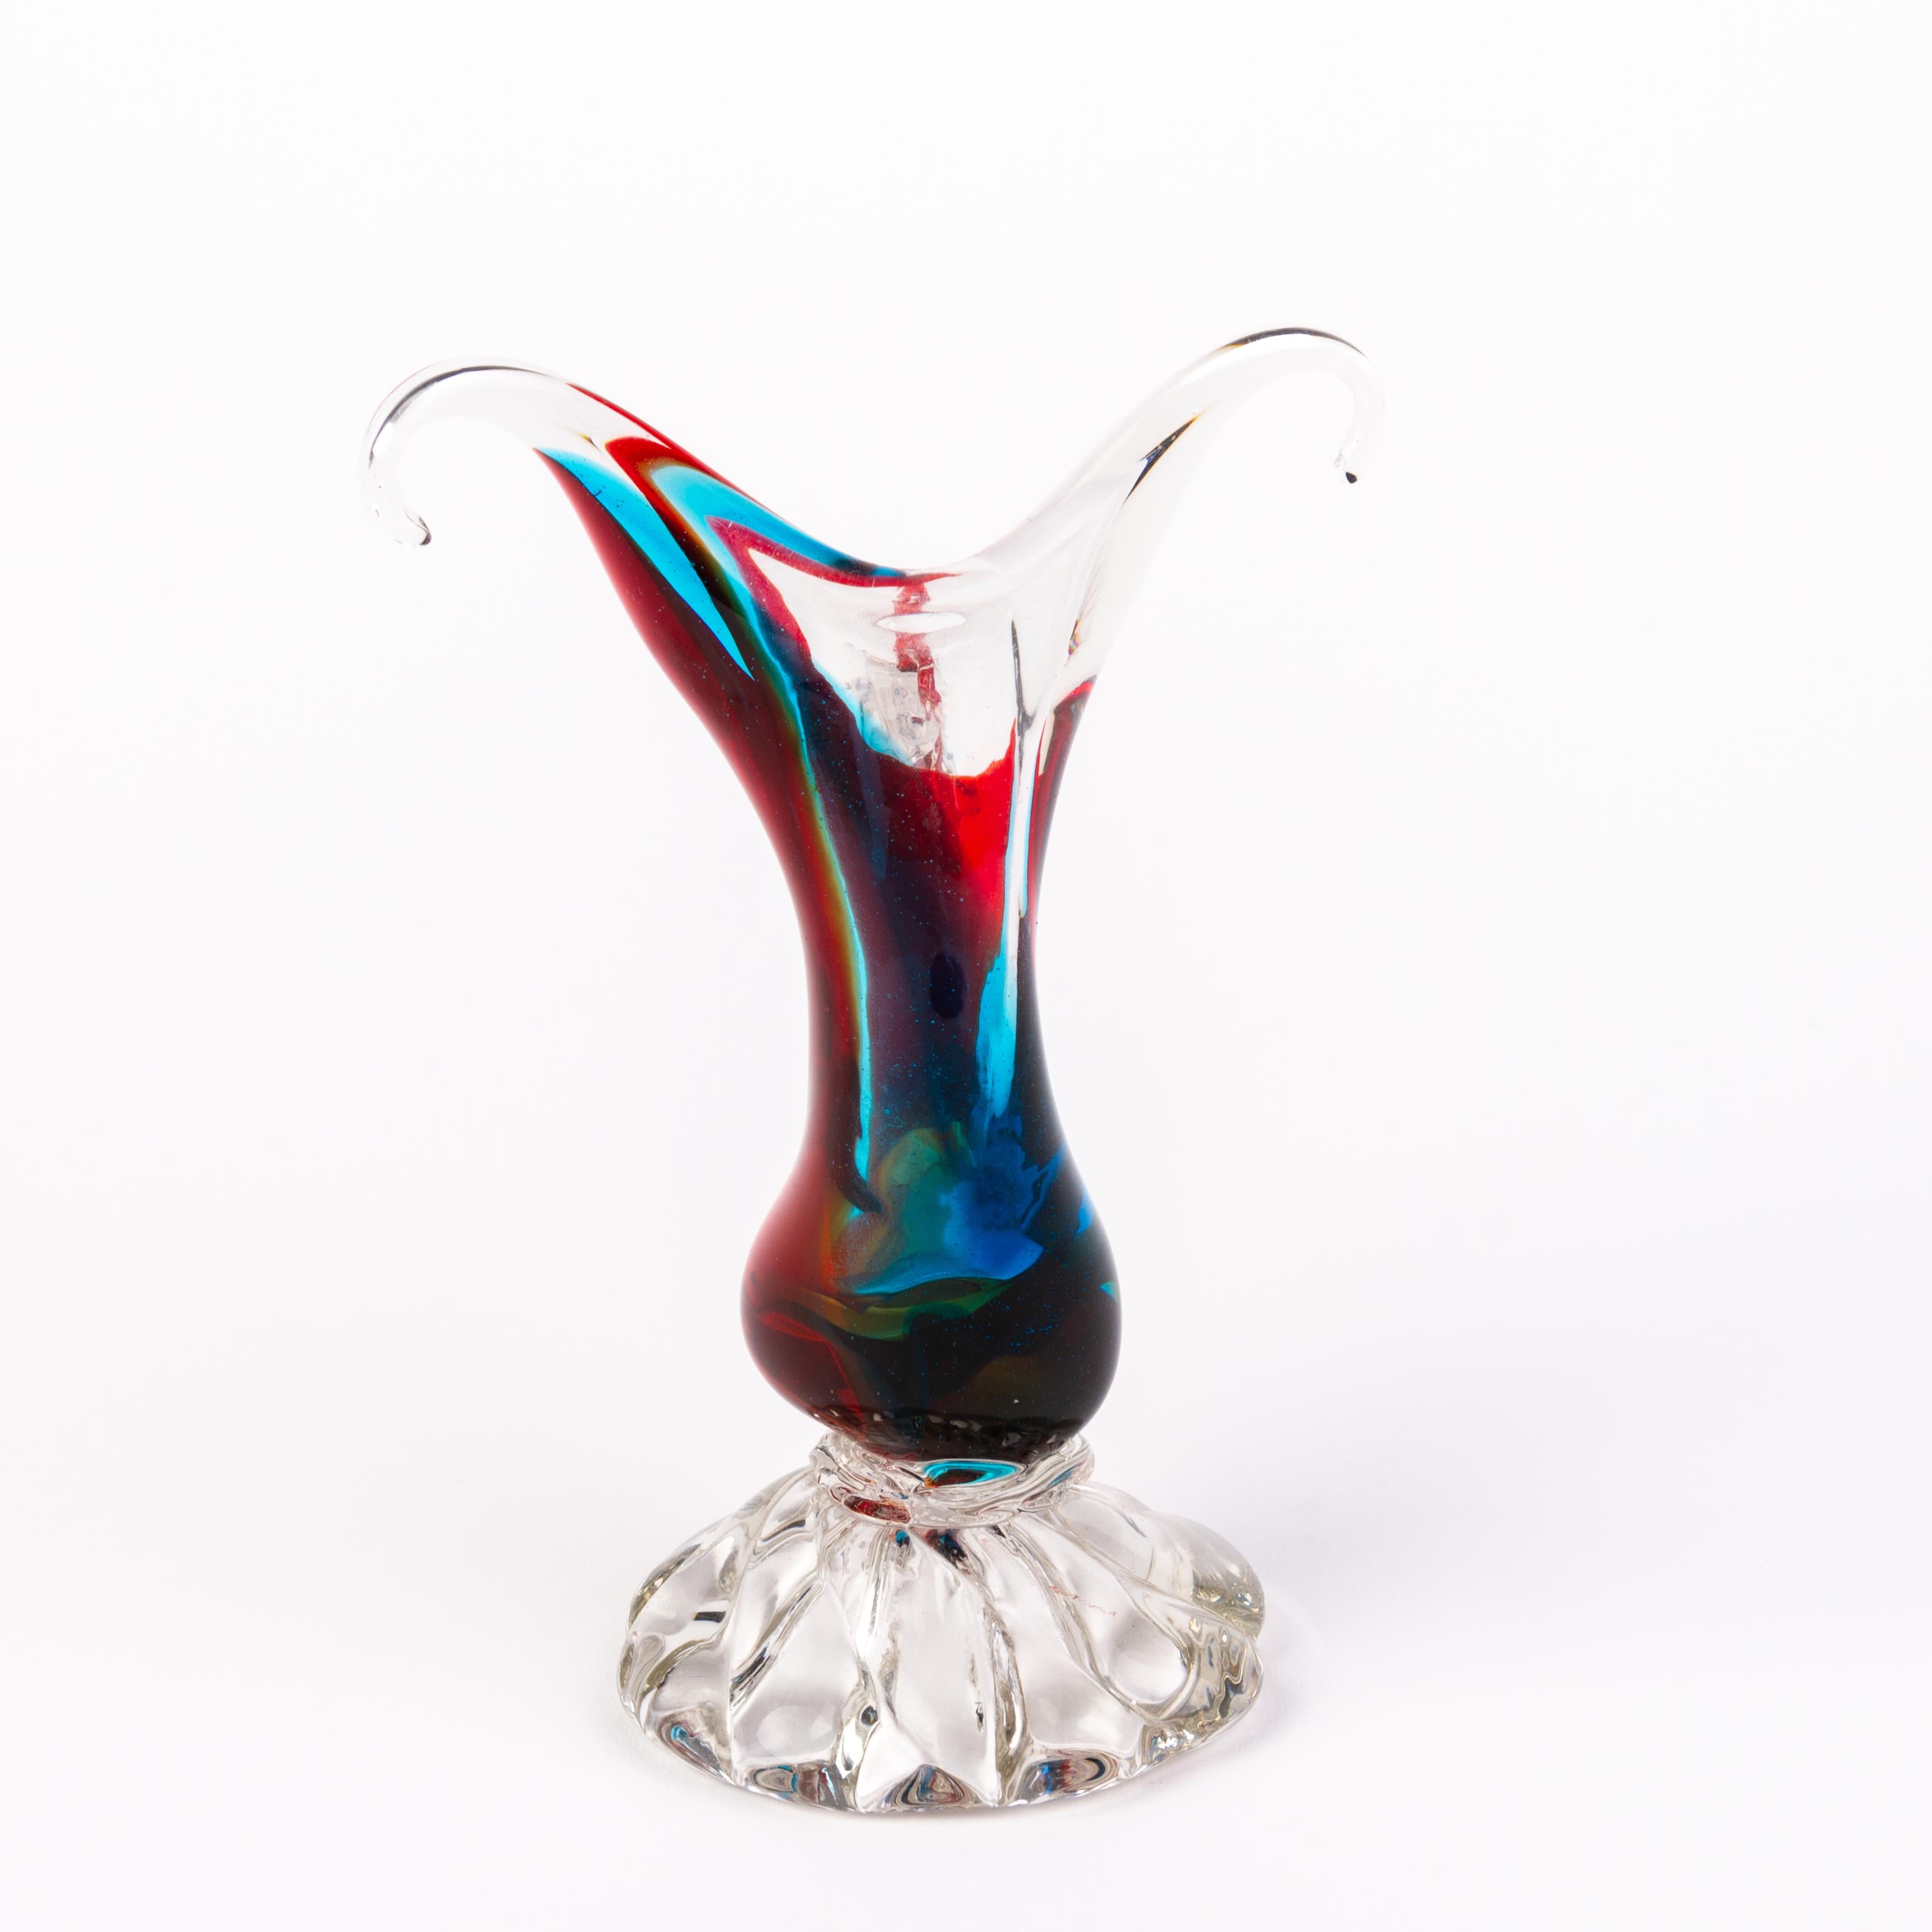 Murano Venetian Glass Sculpture Pheasant
Good condition
Free international shipping.